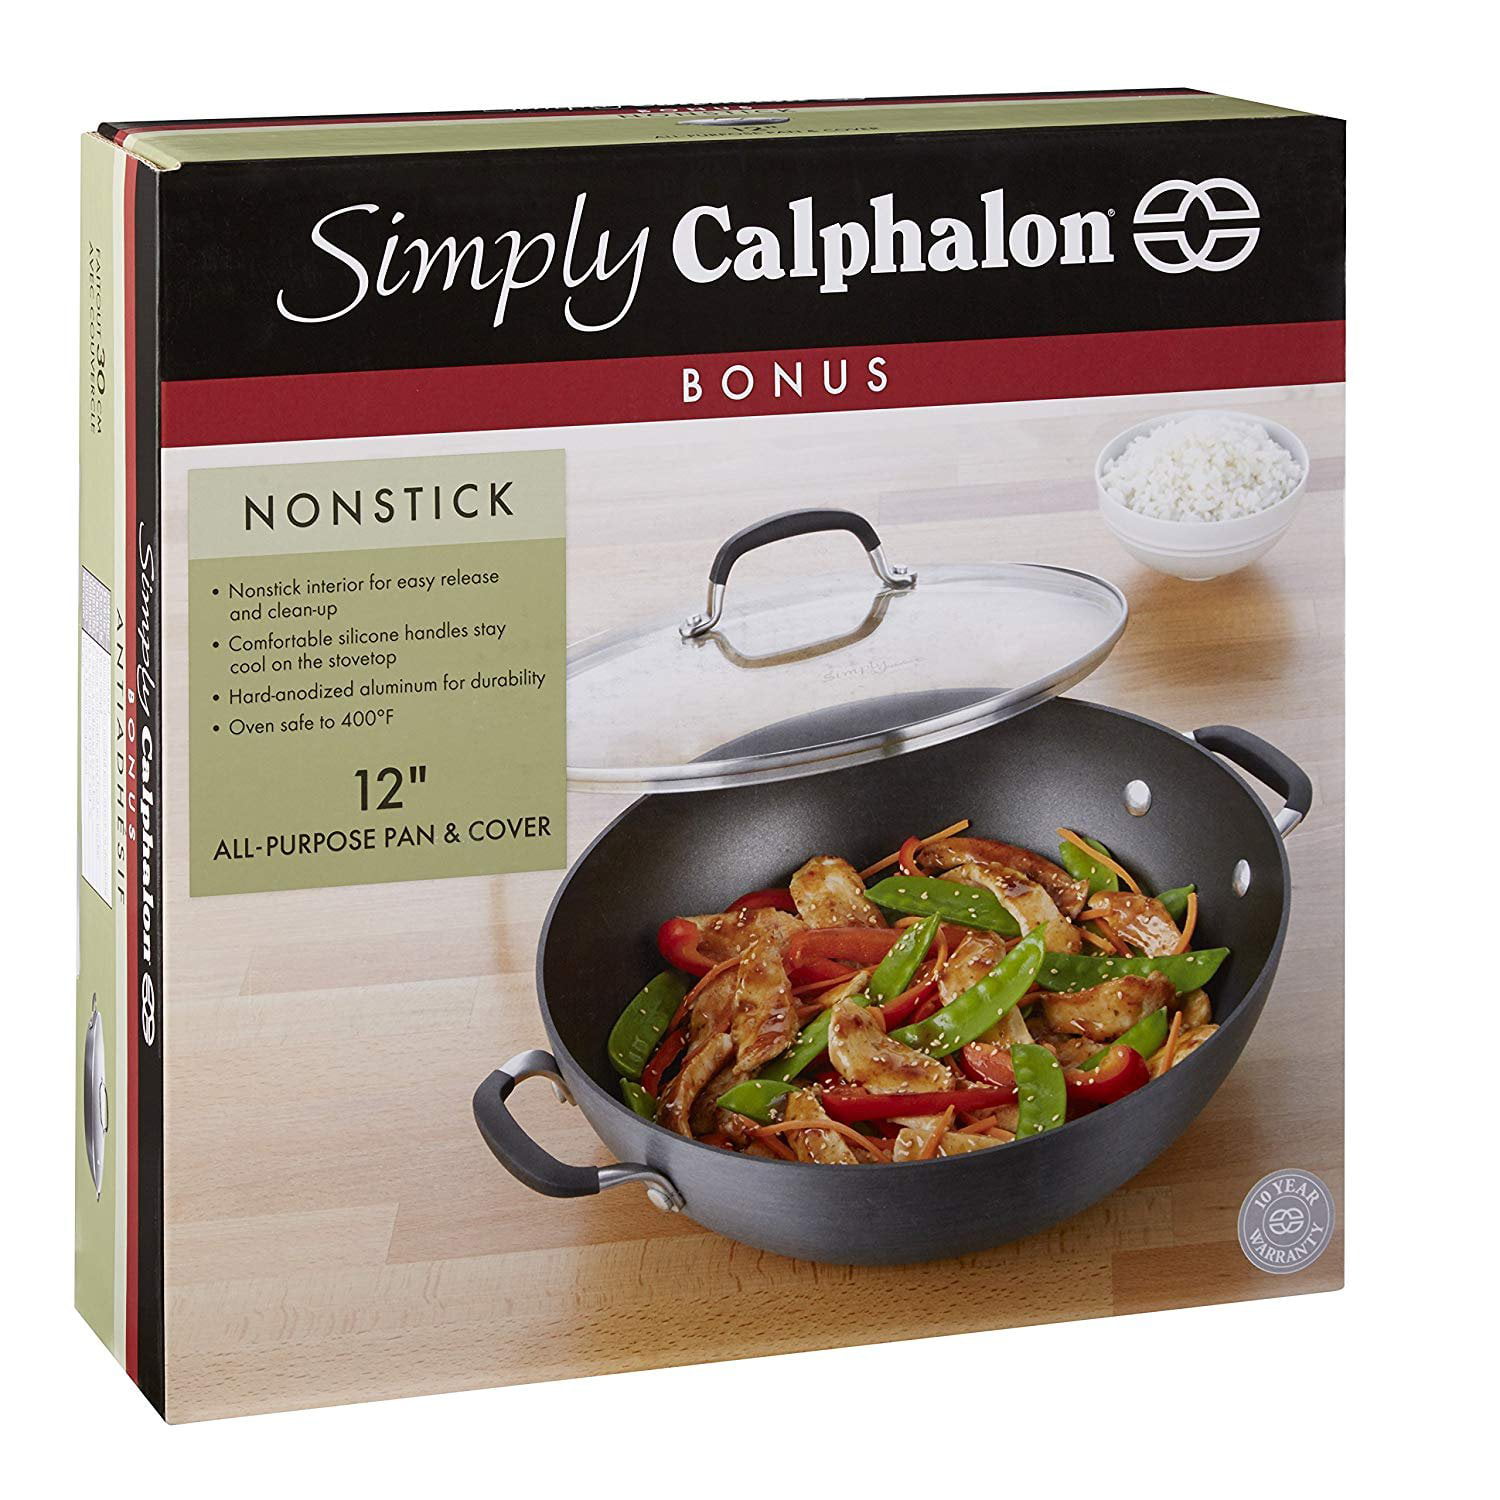 Simply Calphalon Easy System Nonstick 12 Piece Set - Shop Cookware